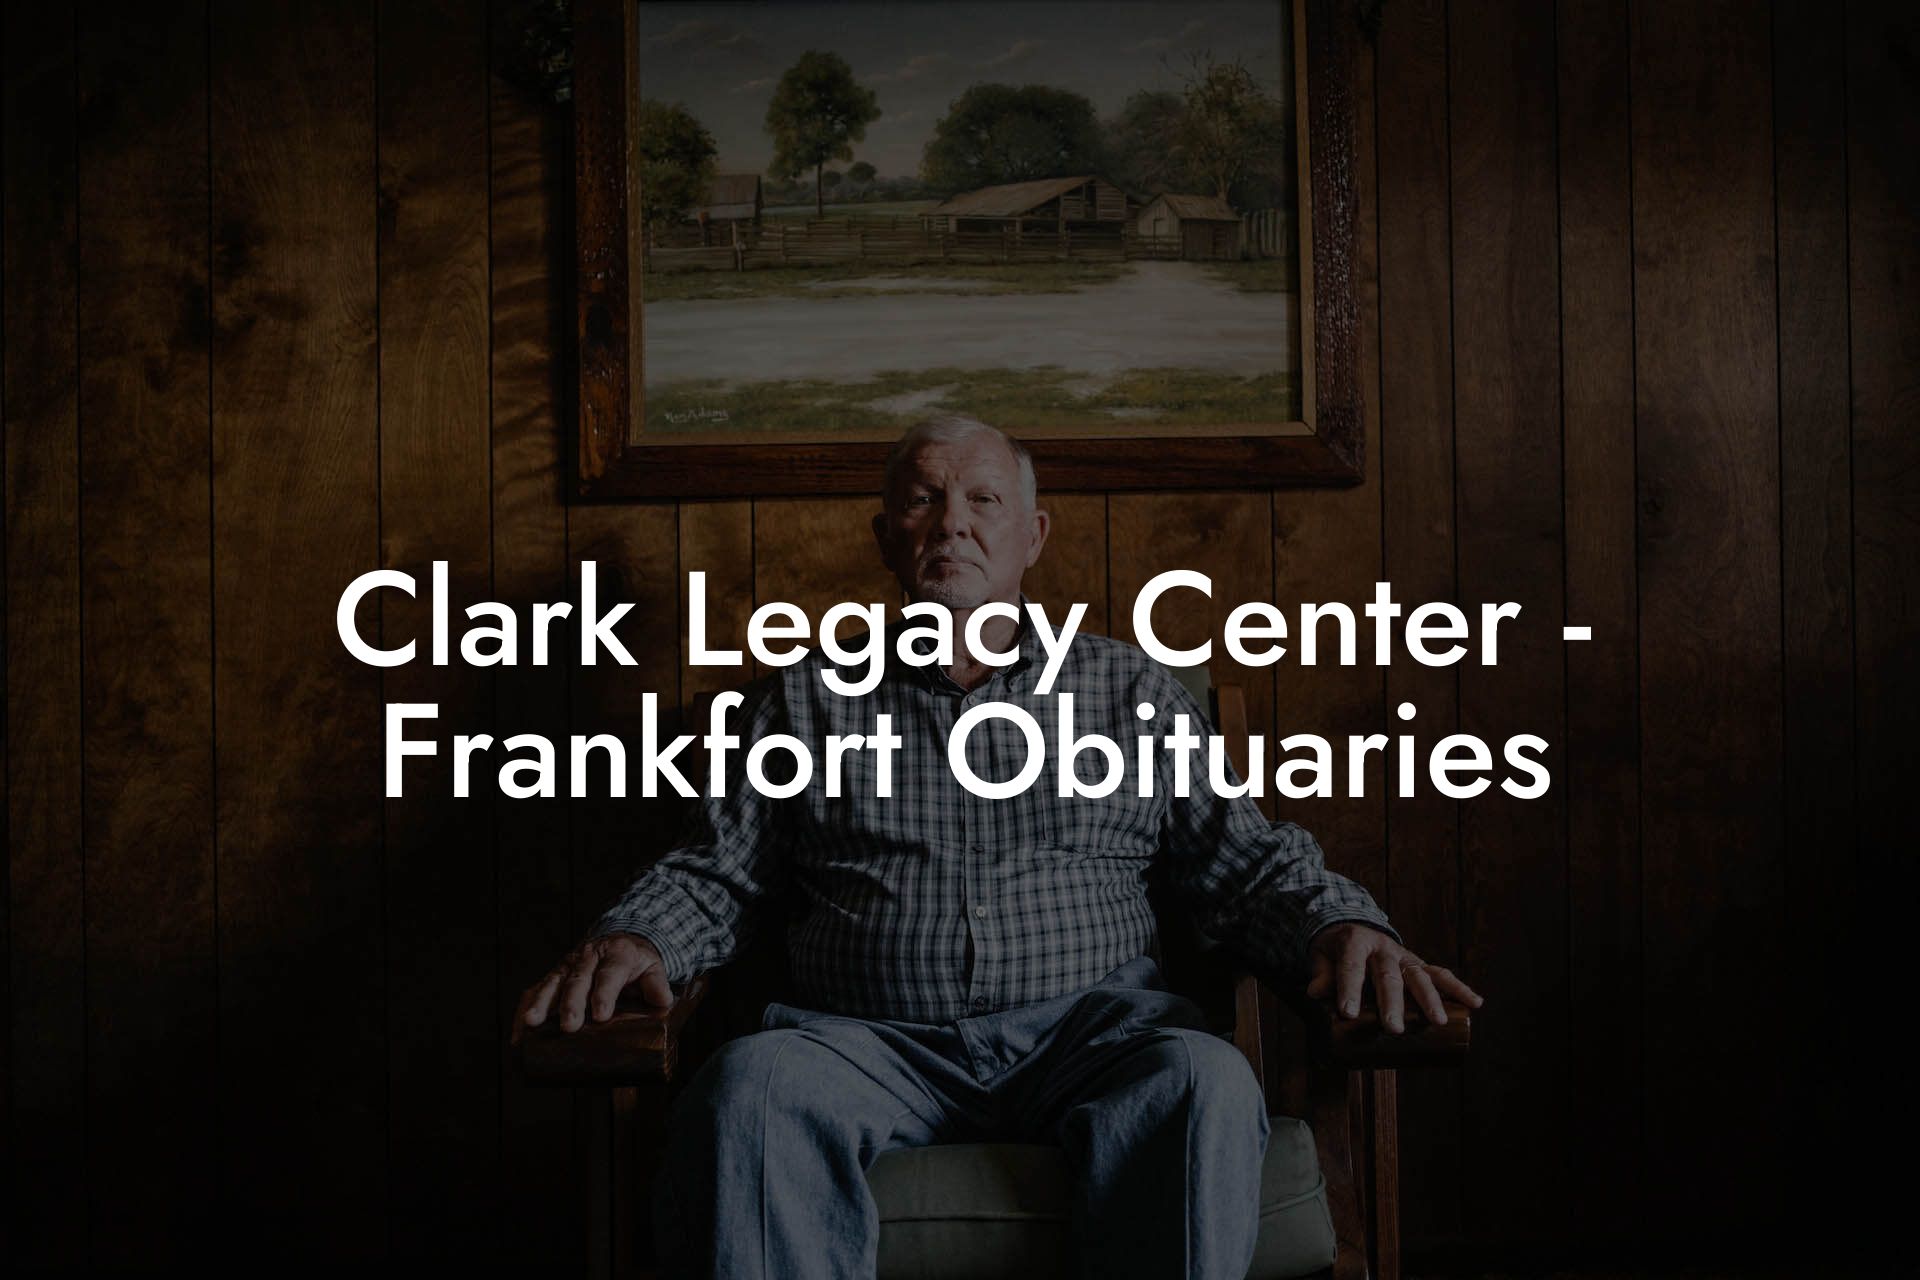 Clark Legacy Center - Frankfort Obituaries